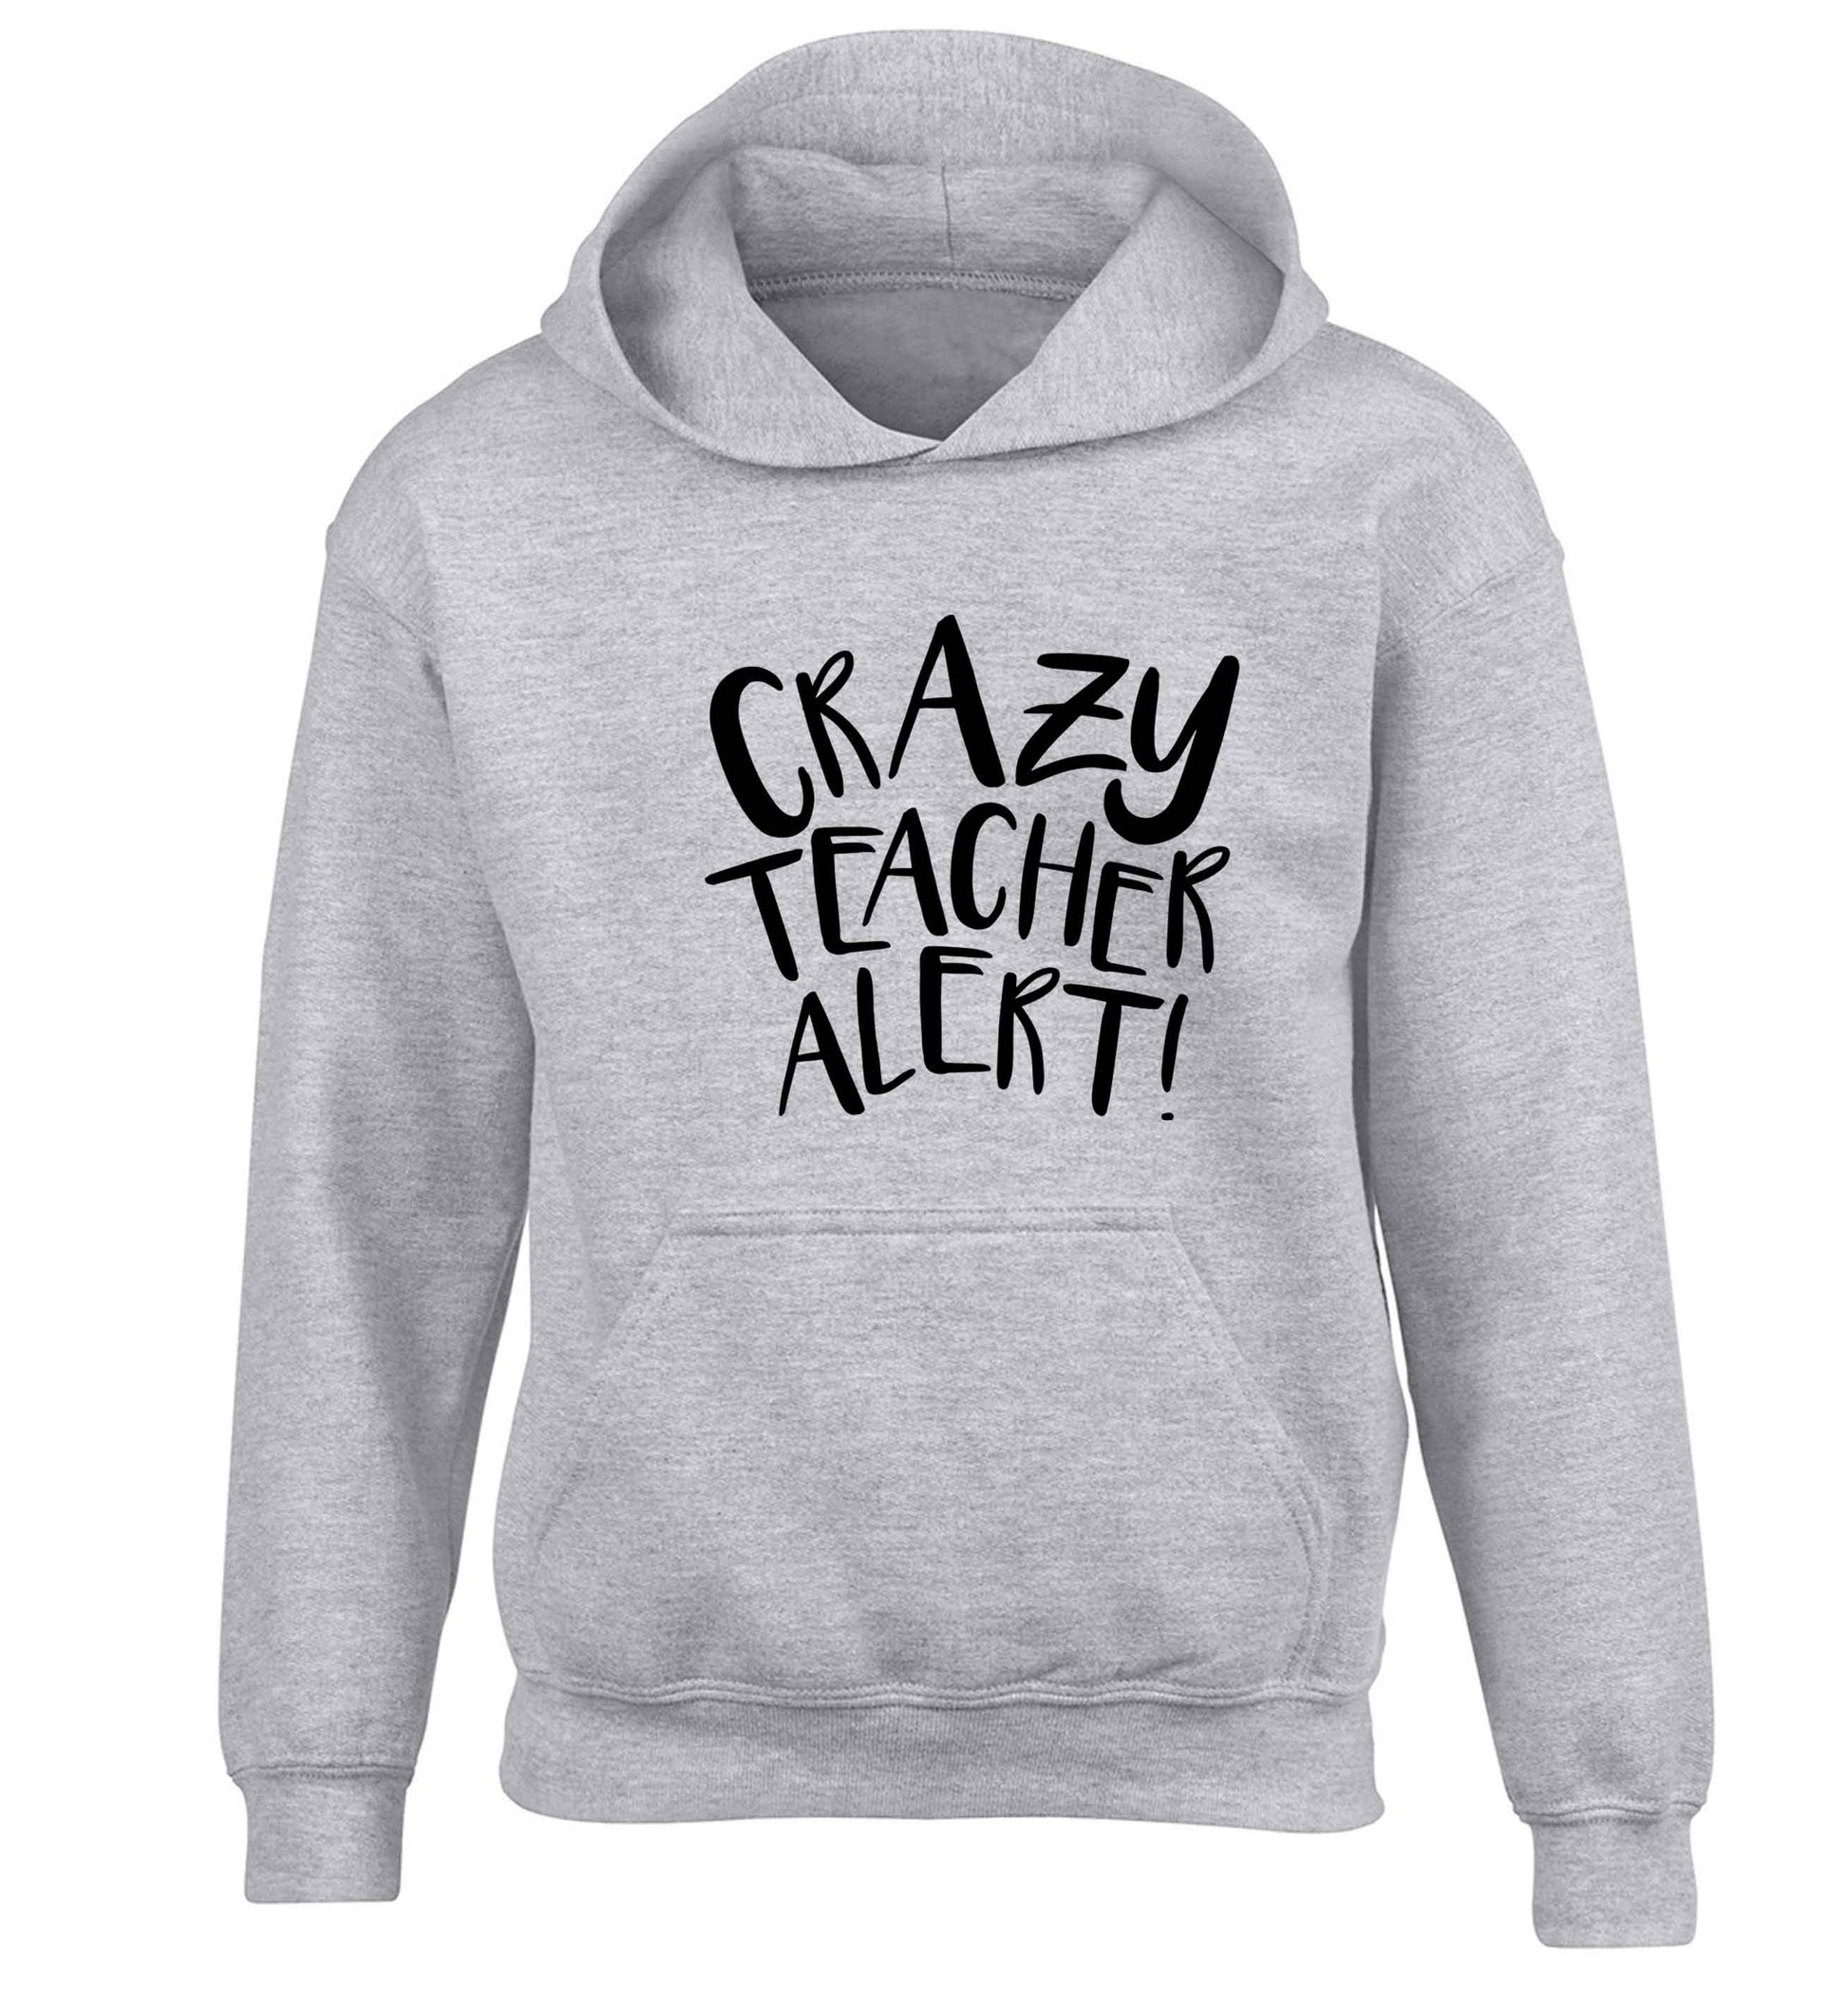 Crazy teacher alert children's grey hoodie 12-13 Years